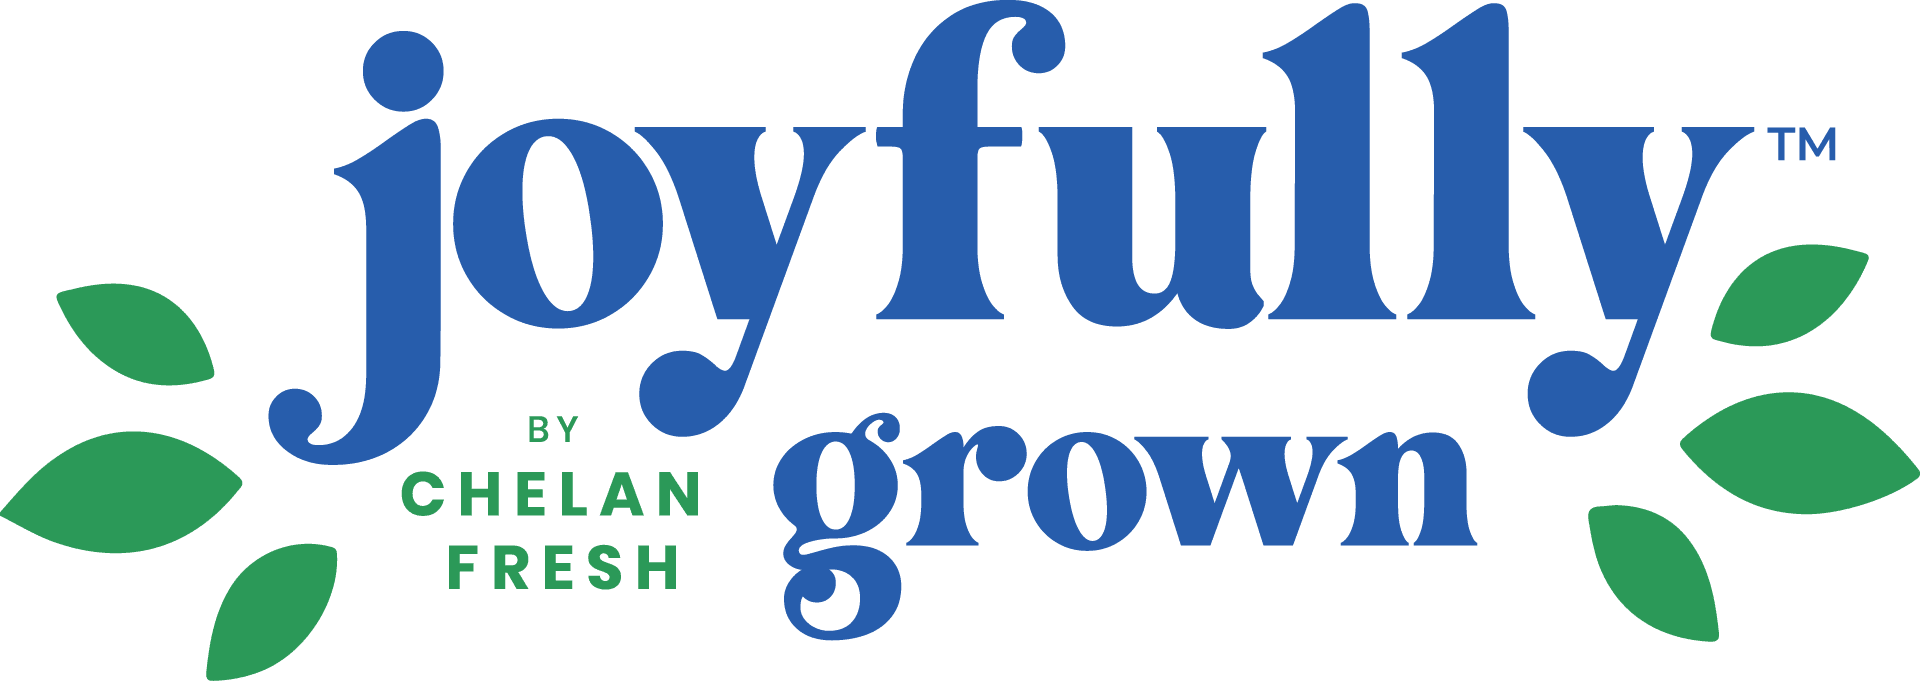 Joyfully-Grown-Logo-Conventional